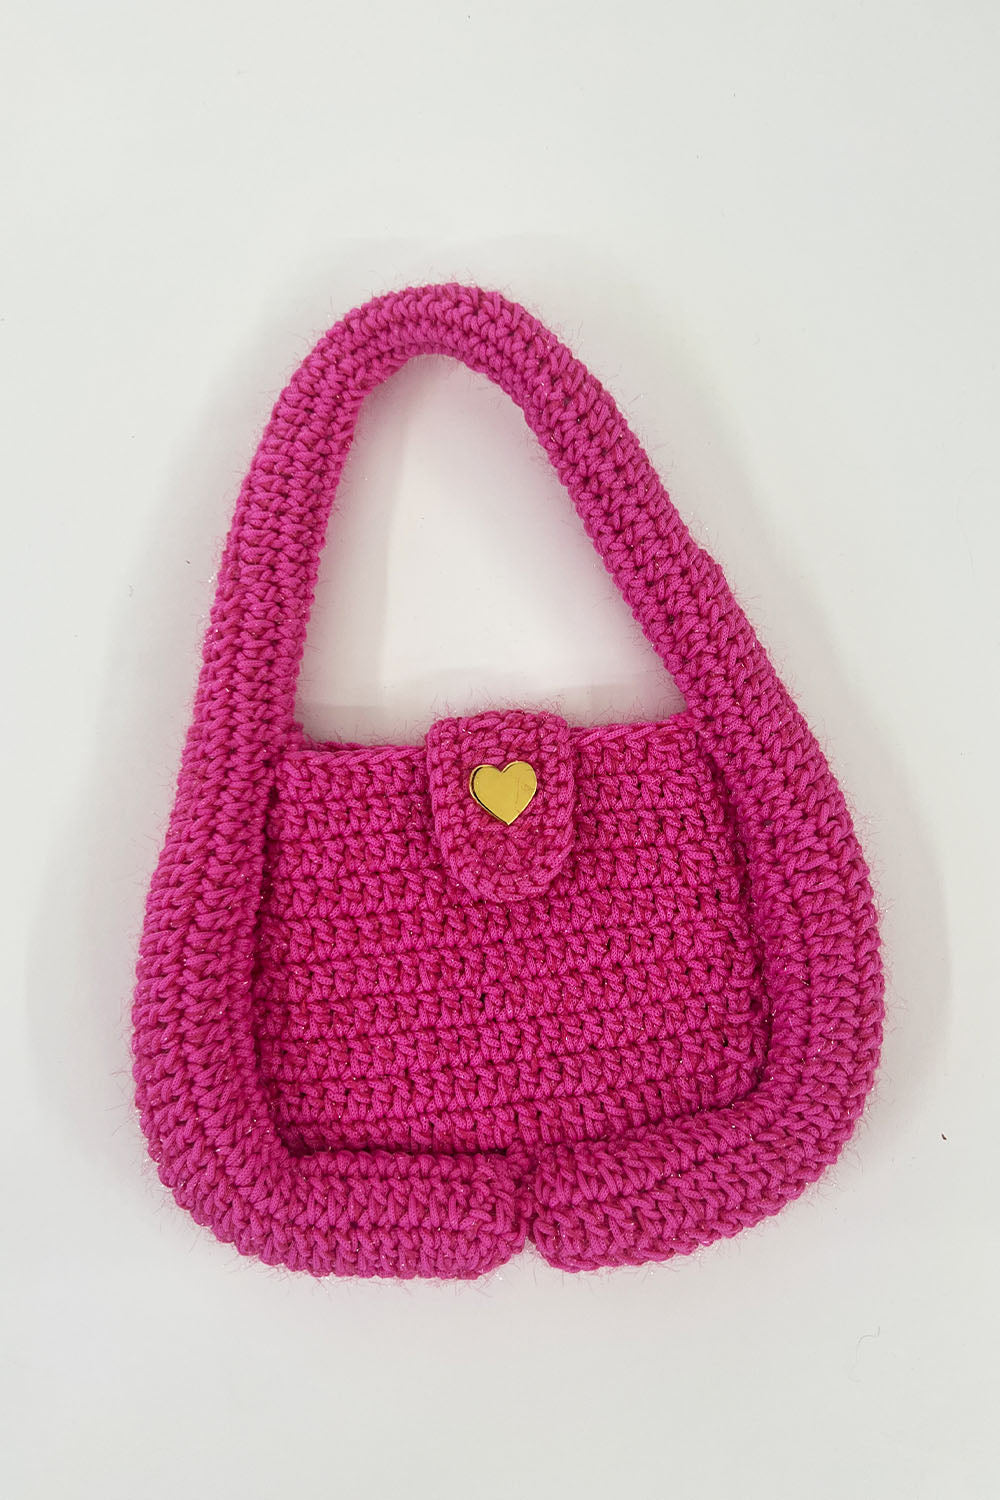 Little Girls Purse - Crochet Pattern Review - Cream of the Crop Crochet -  EyeLoveKnots